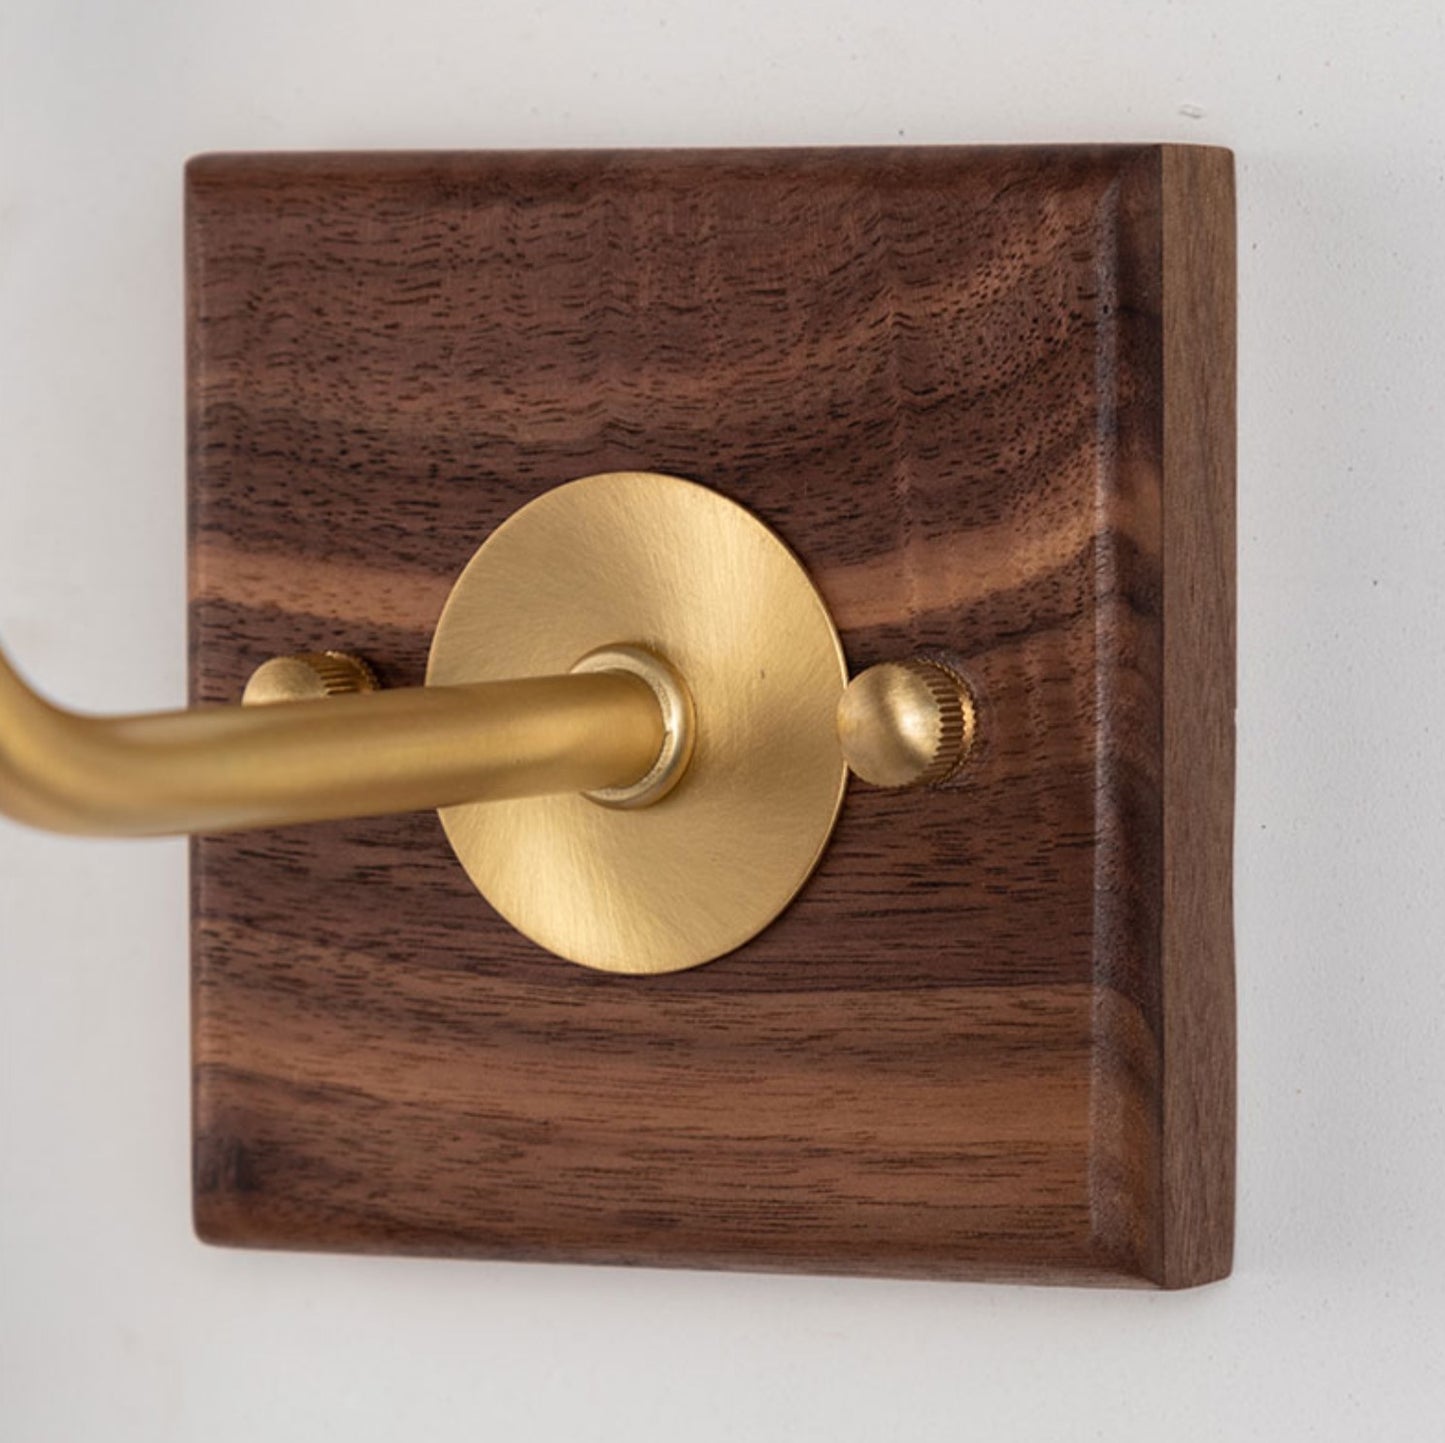 Ogilvy brushed brass & wood wall light